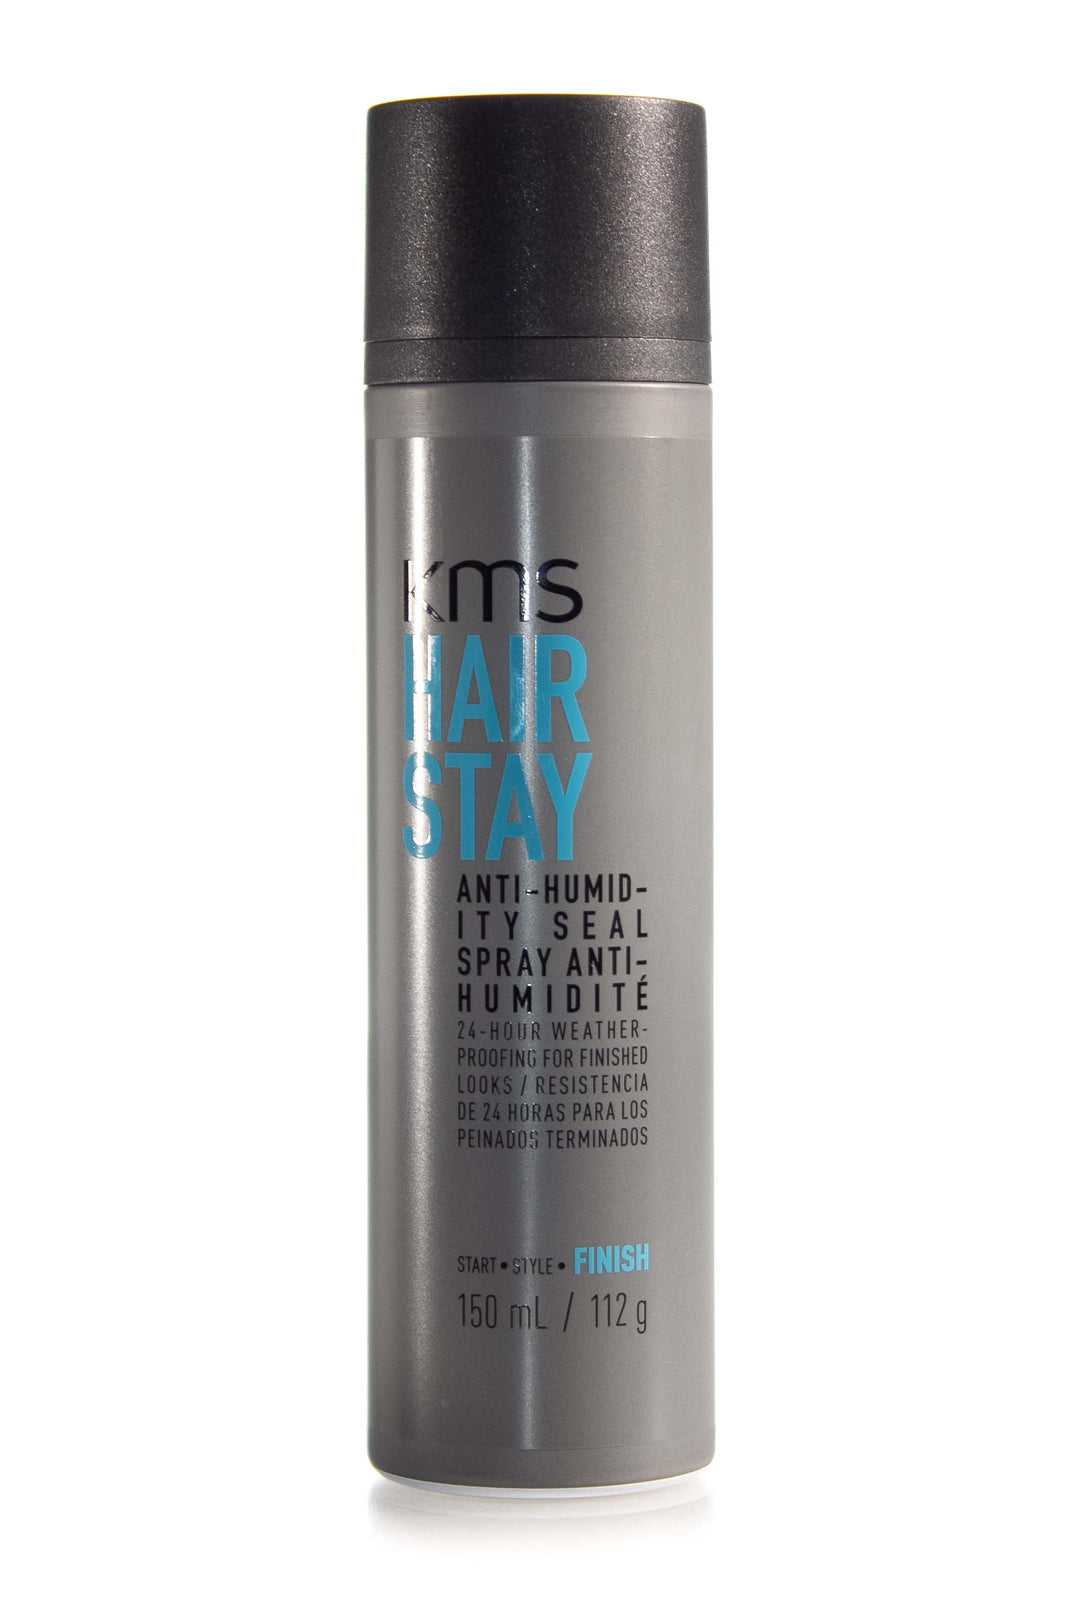 kms-hair-stay-anti-humidity-seal-spray-150ml